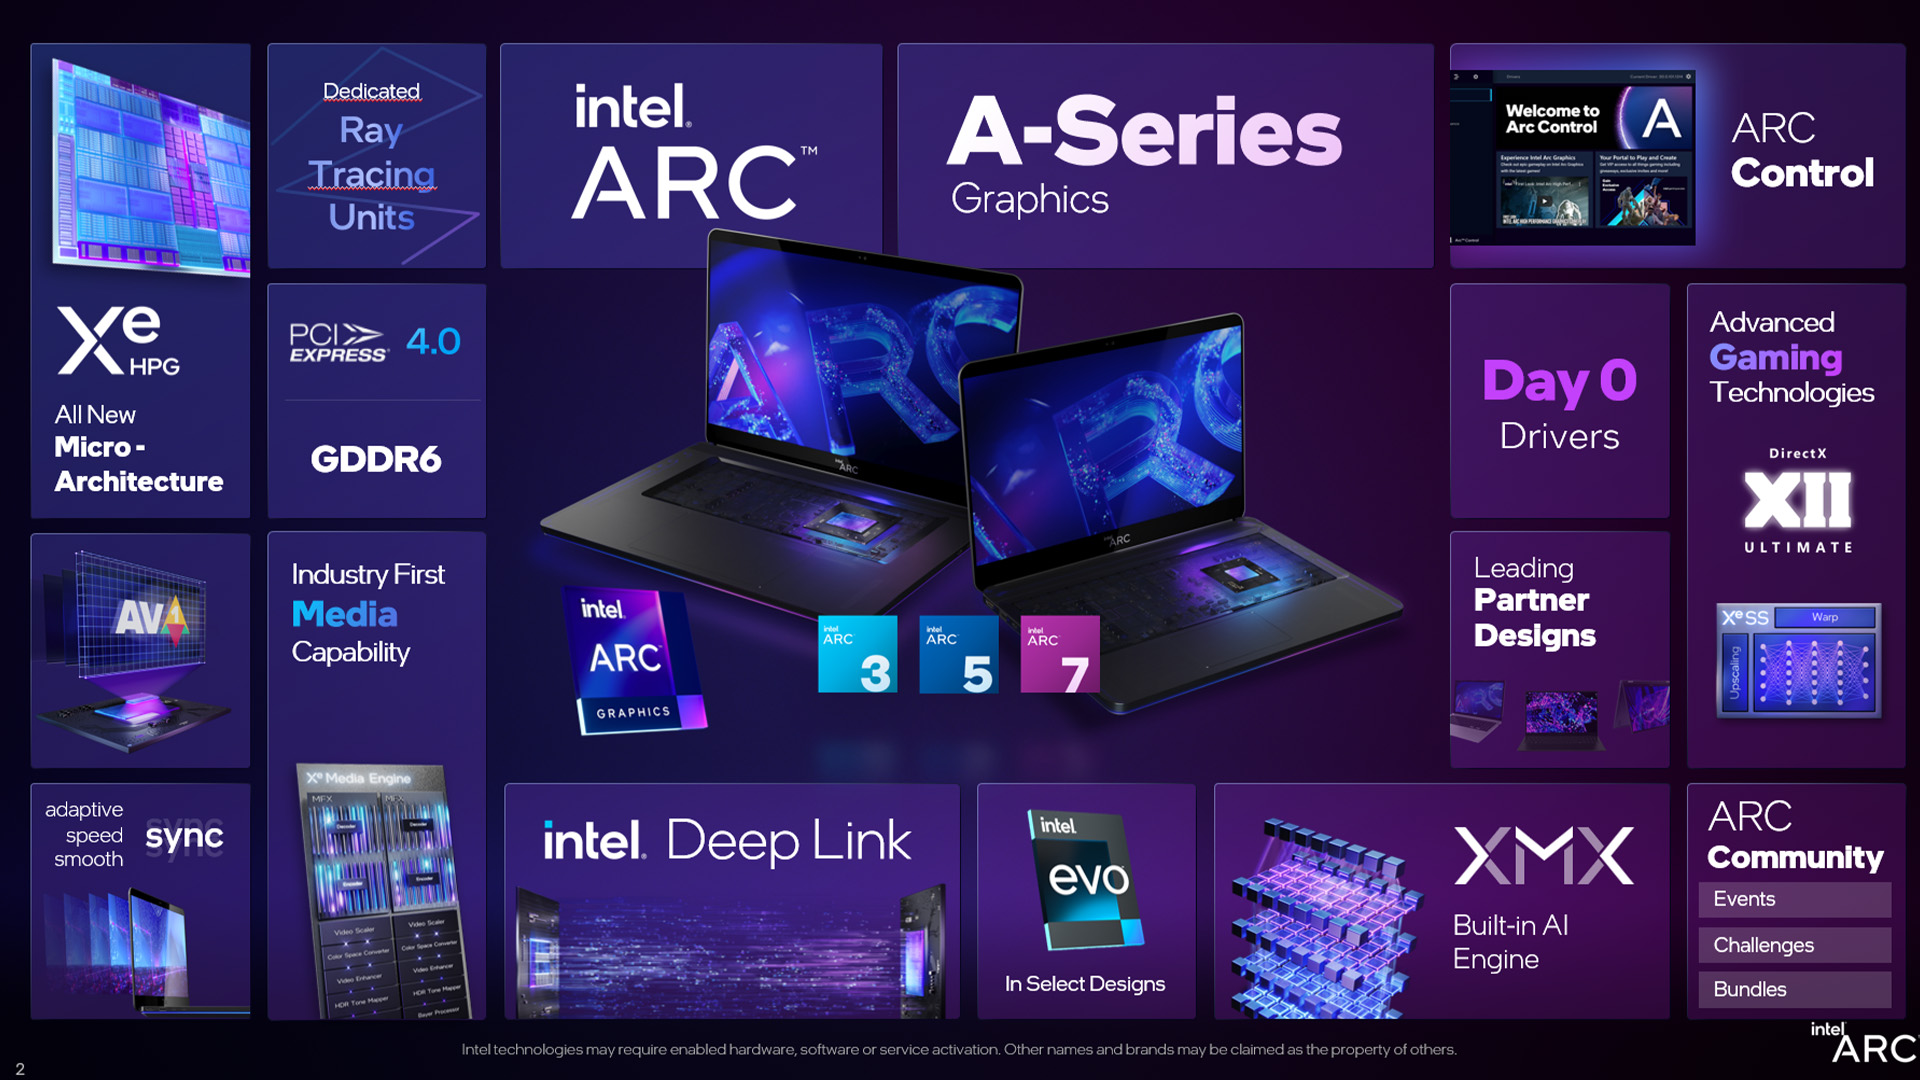 Endurance Gaming Mode on Intel® Arc™ Control